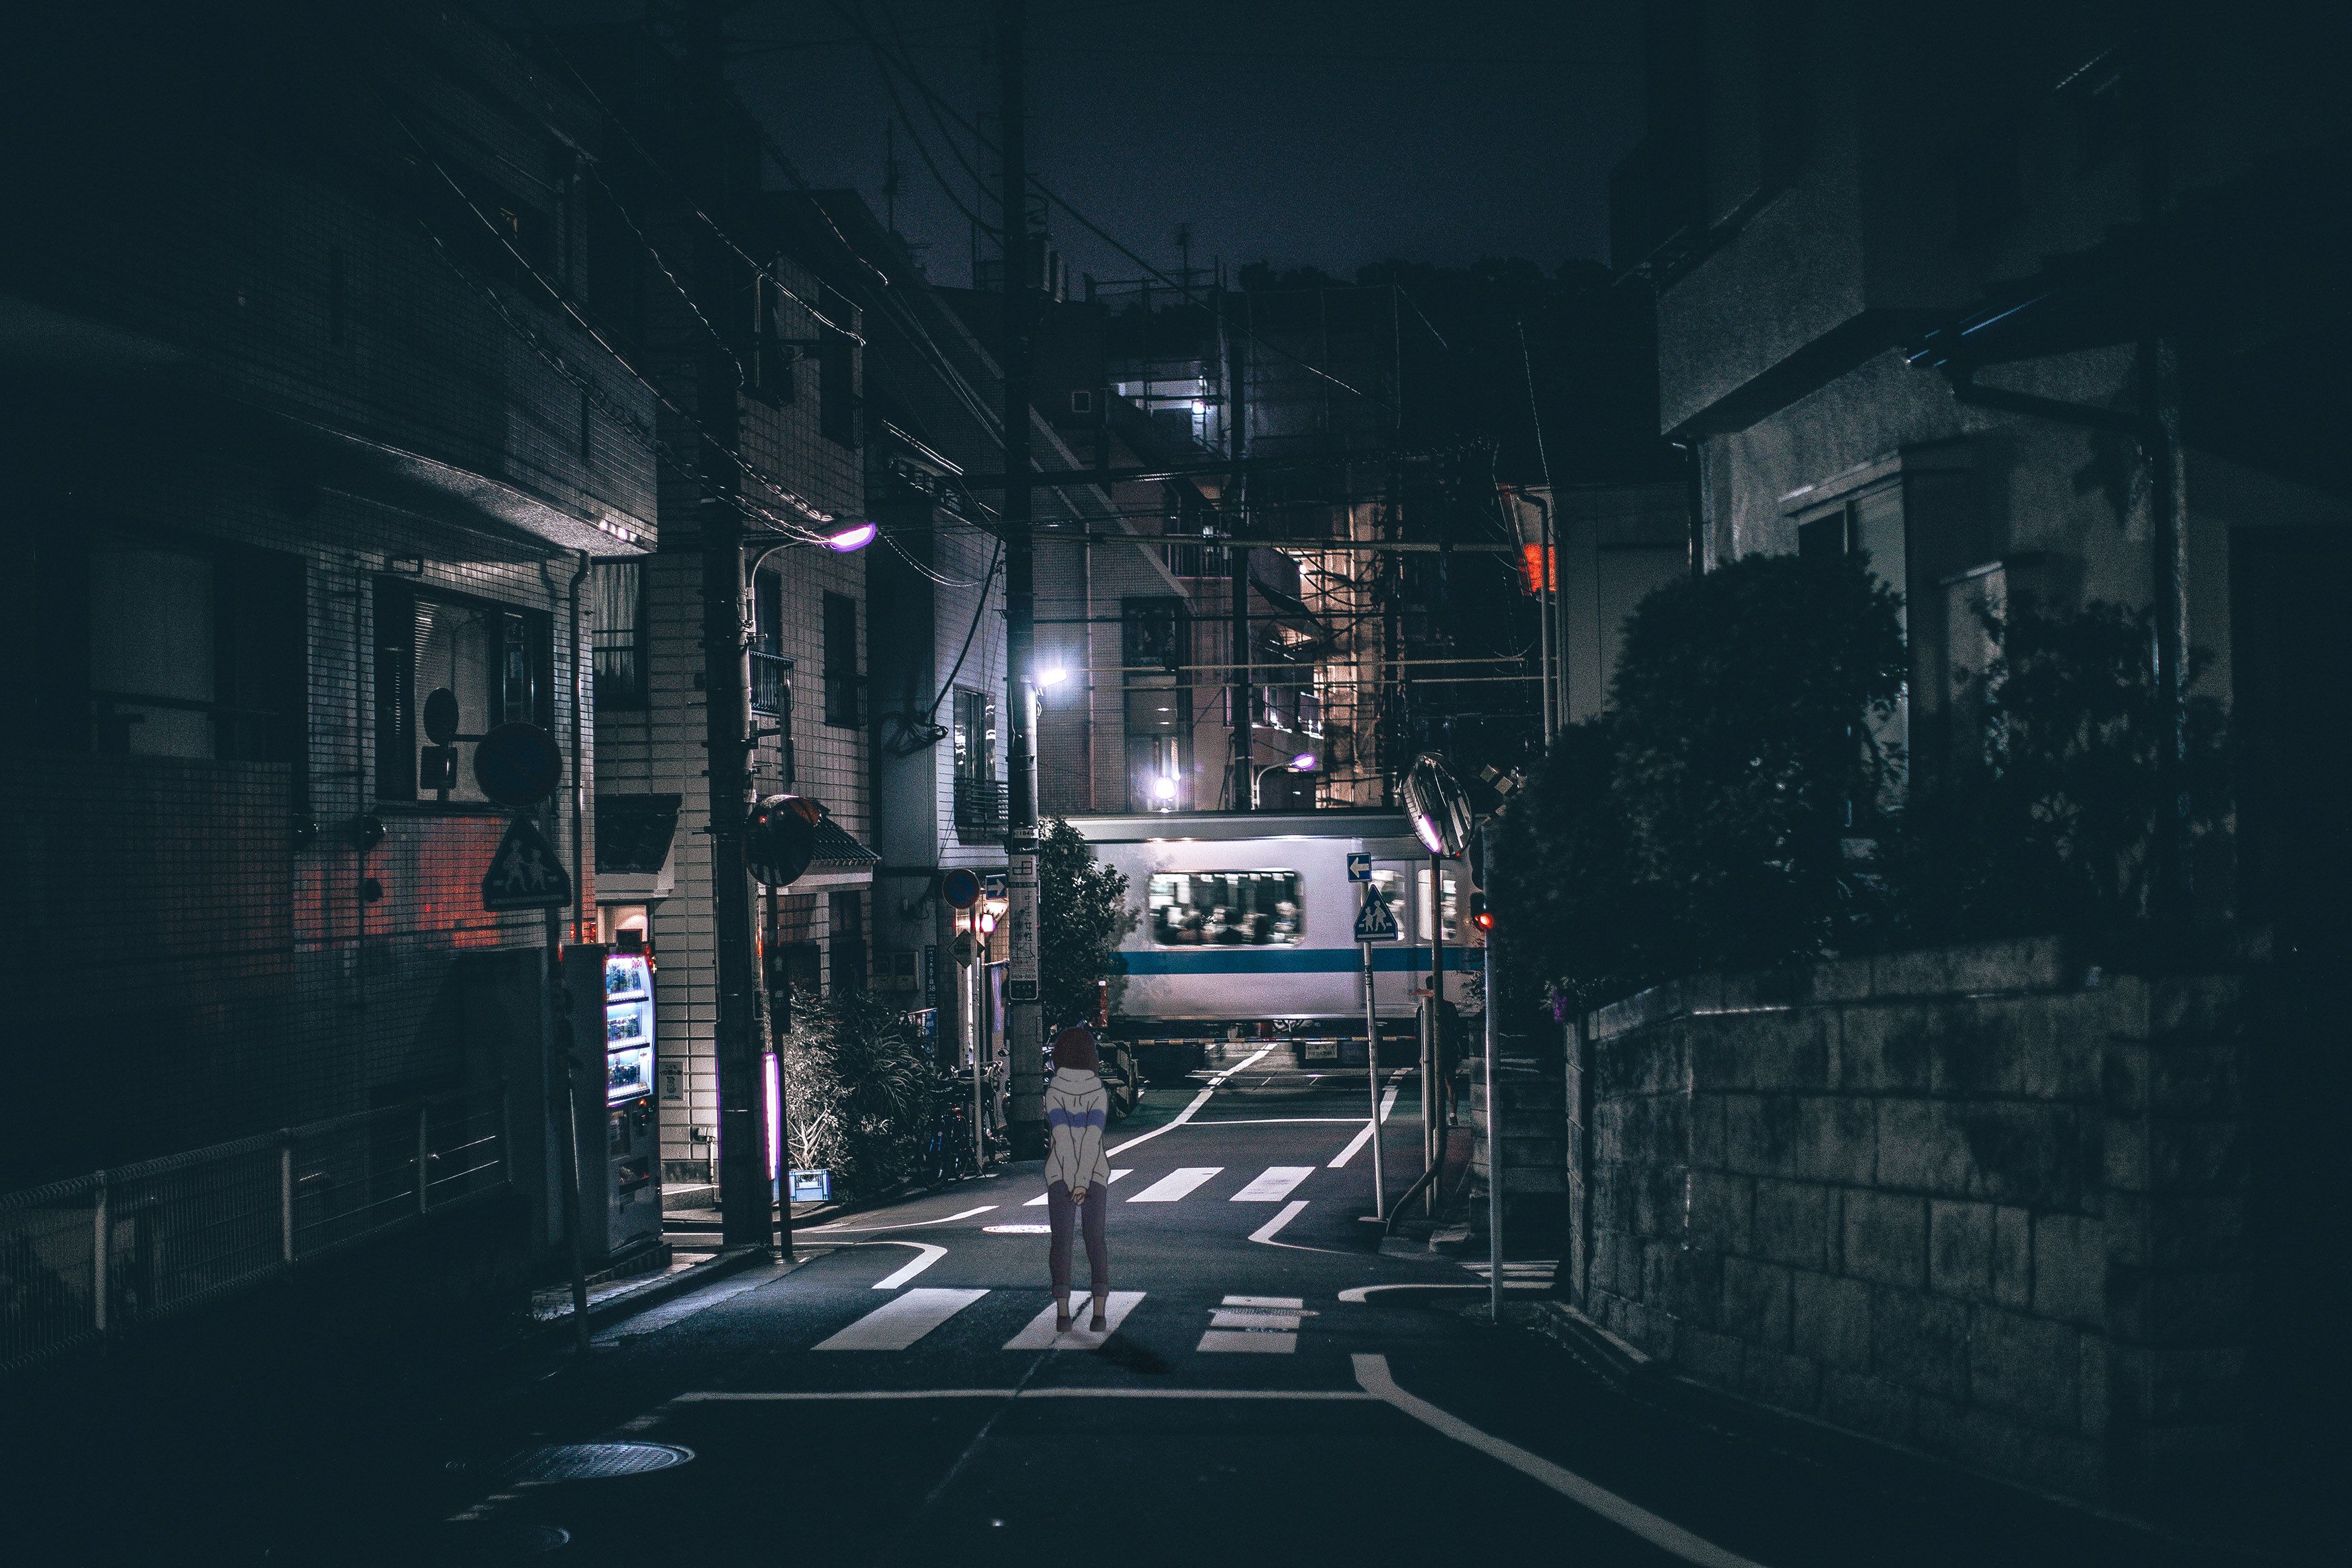 Eugene Bright on Twitter Tranquility original Landscape scenery  background japan Street anime art illustration 風景  httpstcoXalzx13ICX httpstcodZfl01OsGd  Twitter